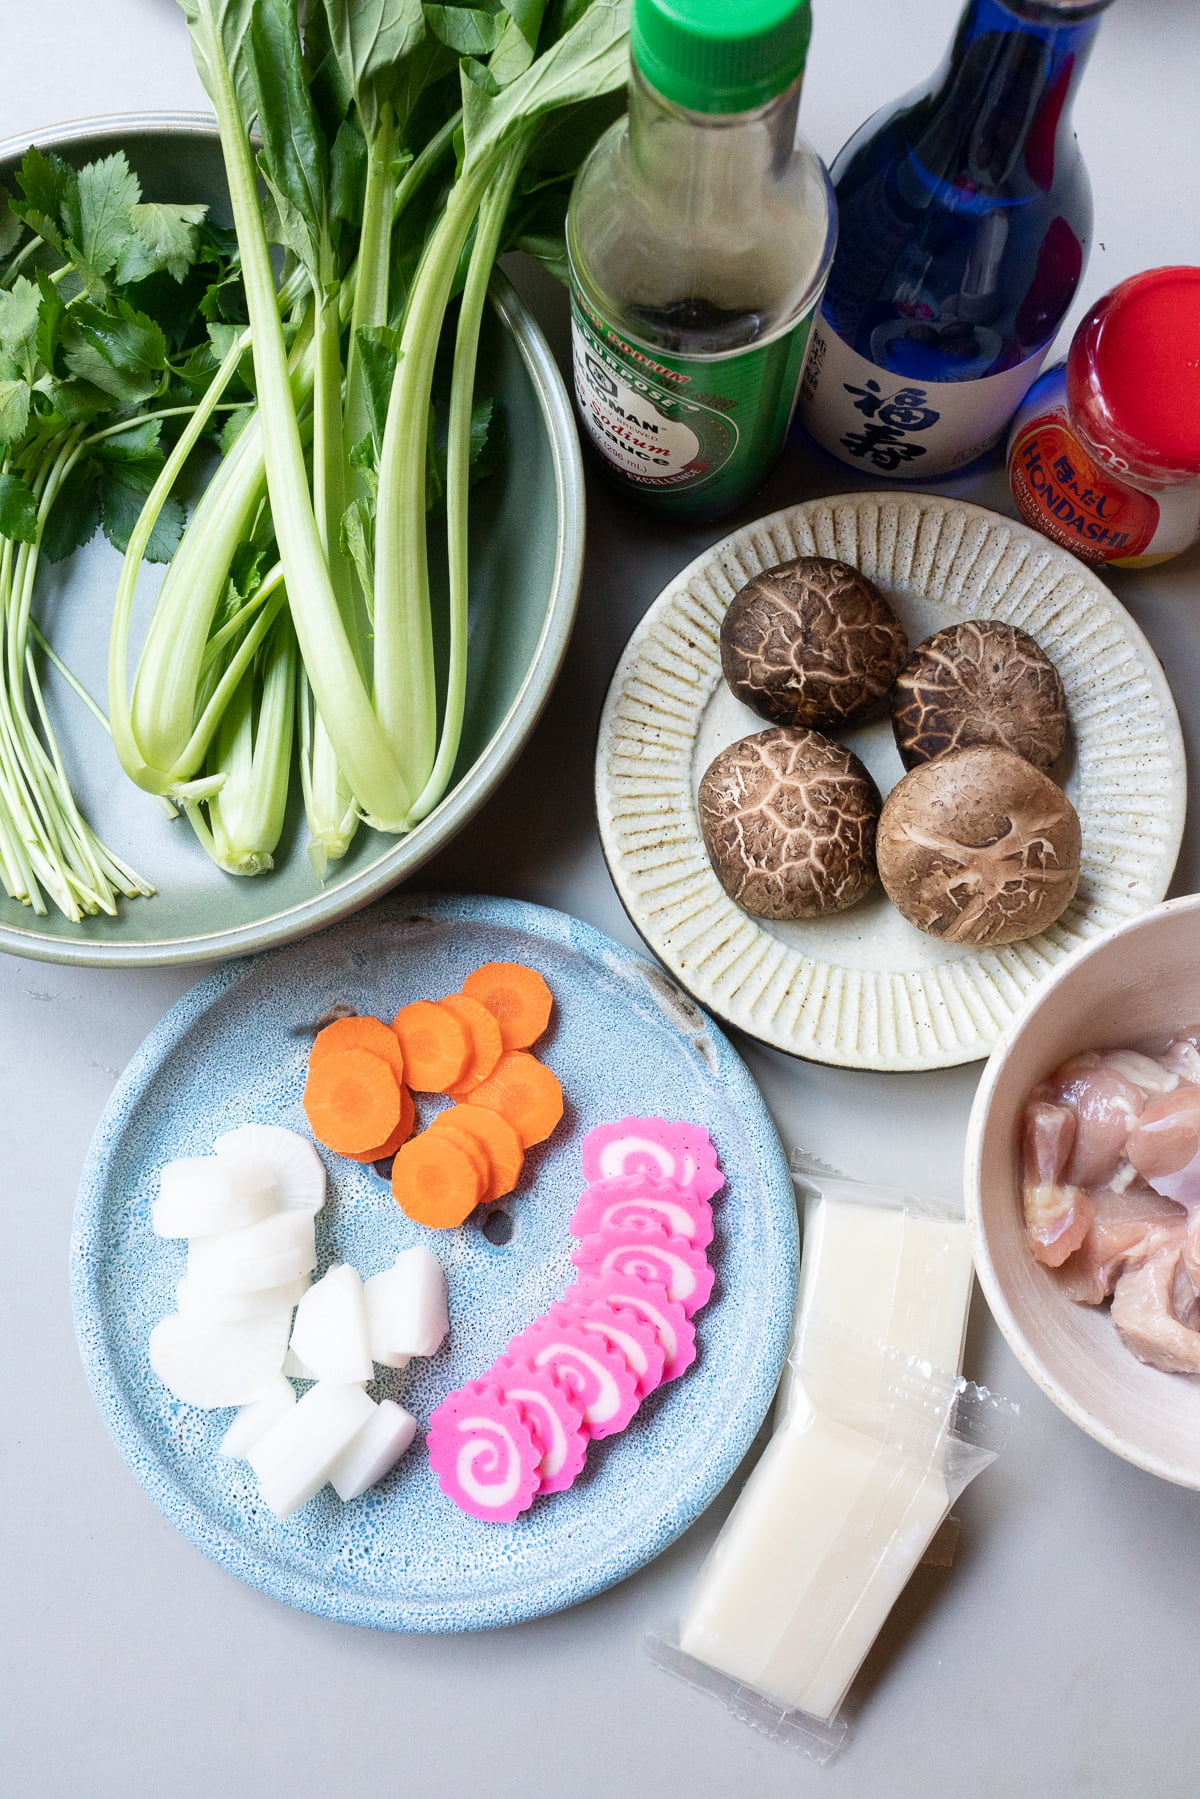 Ingredients for ozoni, laid out on a table (kirimochi, chicken, kamaboko, carrots, daikon, mitsuba, komatsuna, shiitake mushrooms, soy sauce, sake, and dashi.